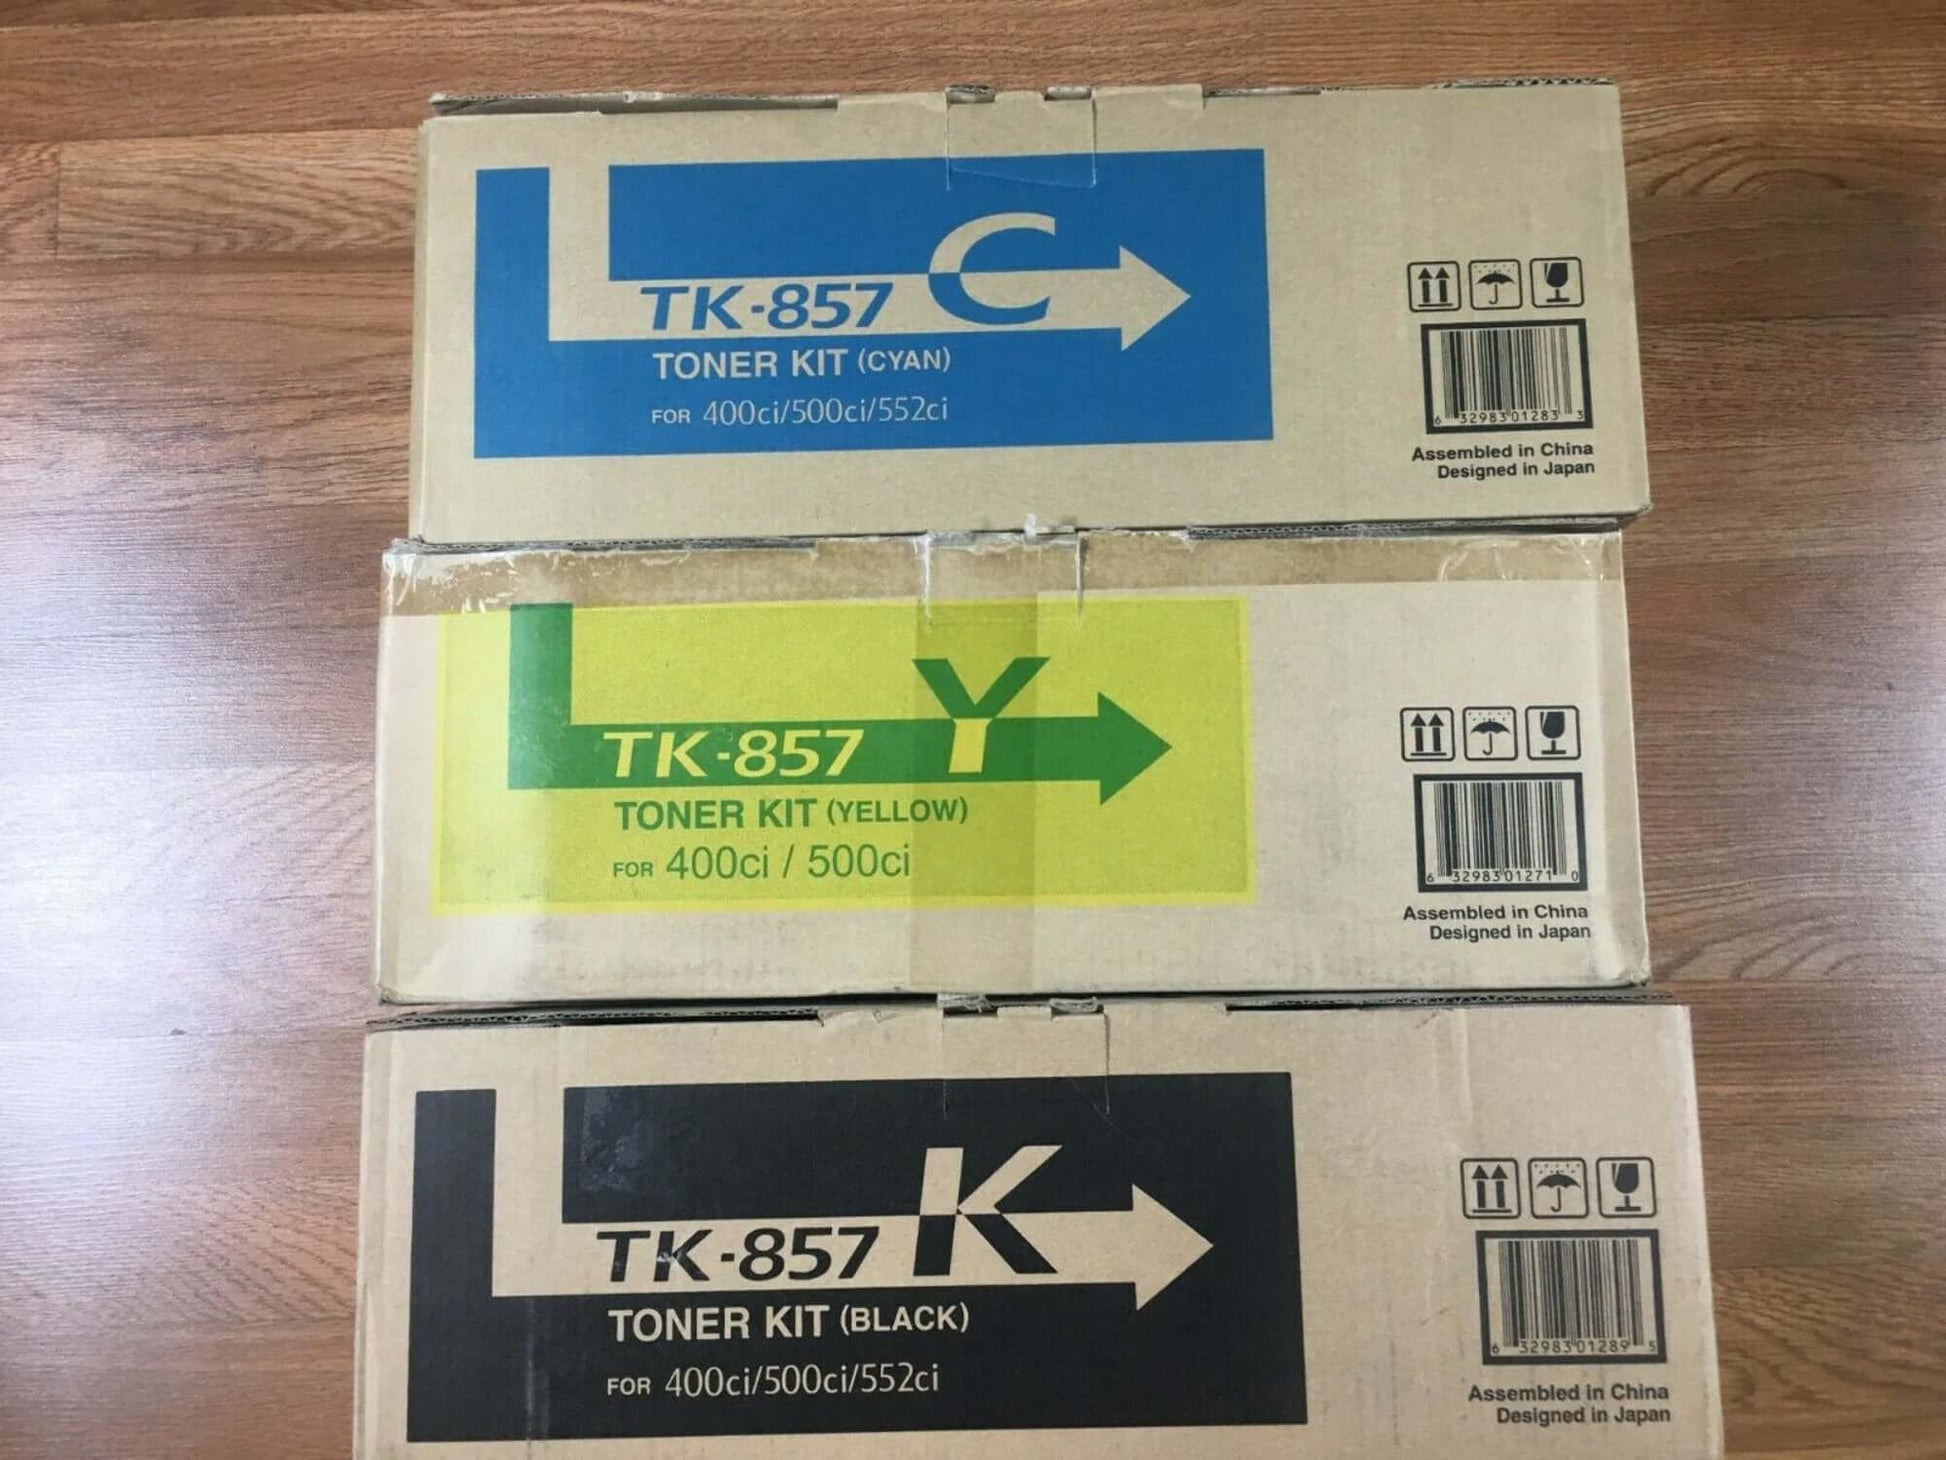 3 OEM Kyocera TK-857C TK-857Y TK-857K C,Y,K toners - No Waste Bottles FedEx 2Day - copier-clearance-center